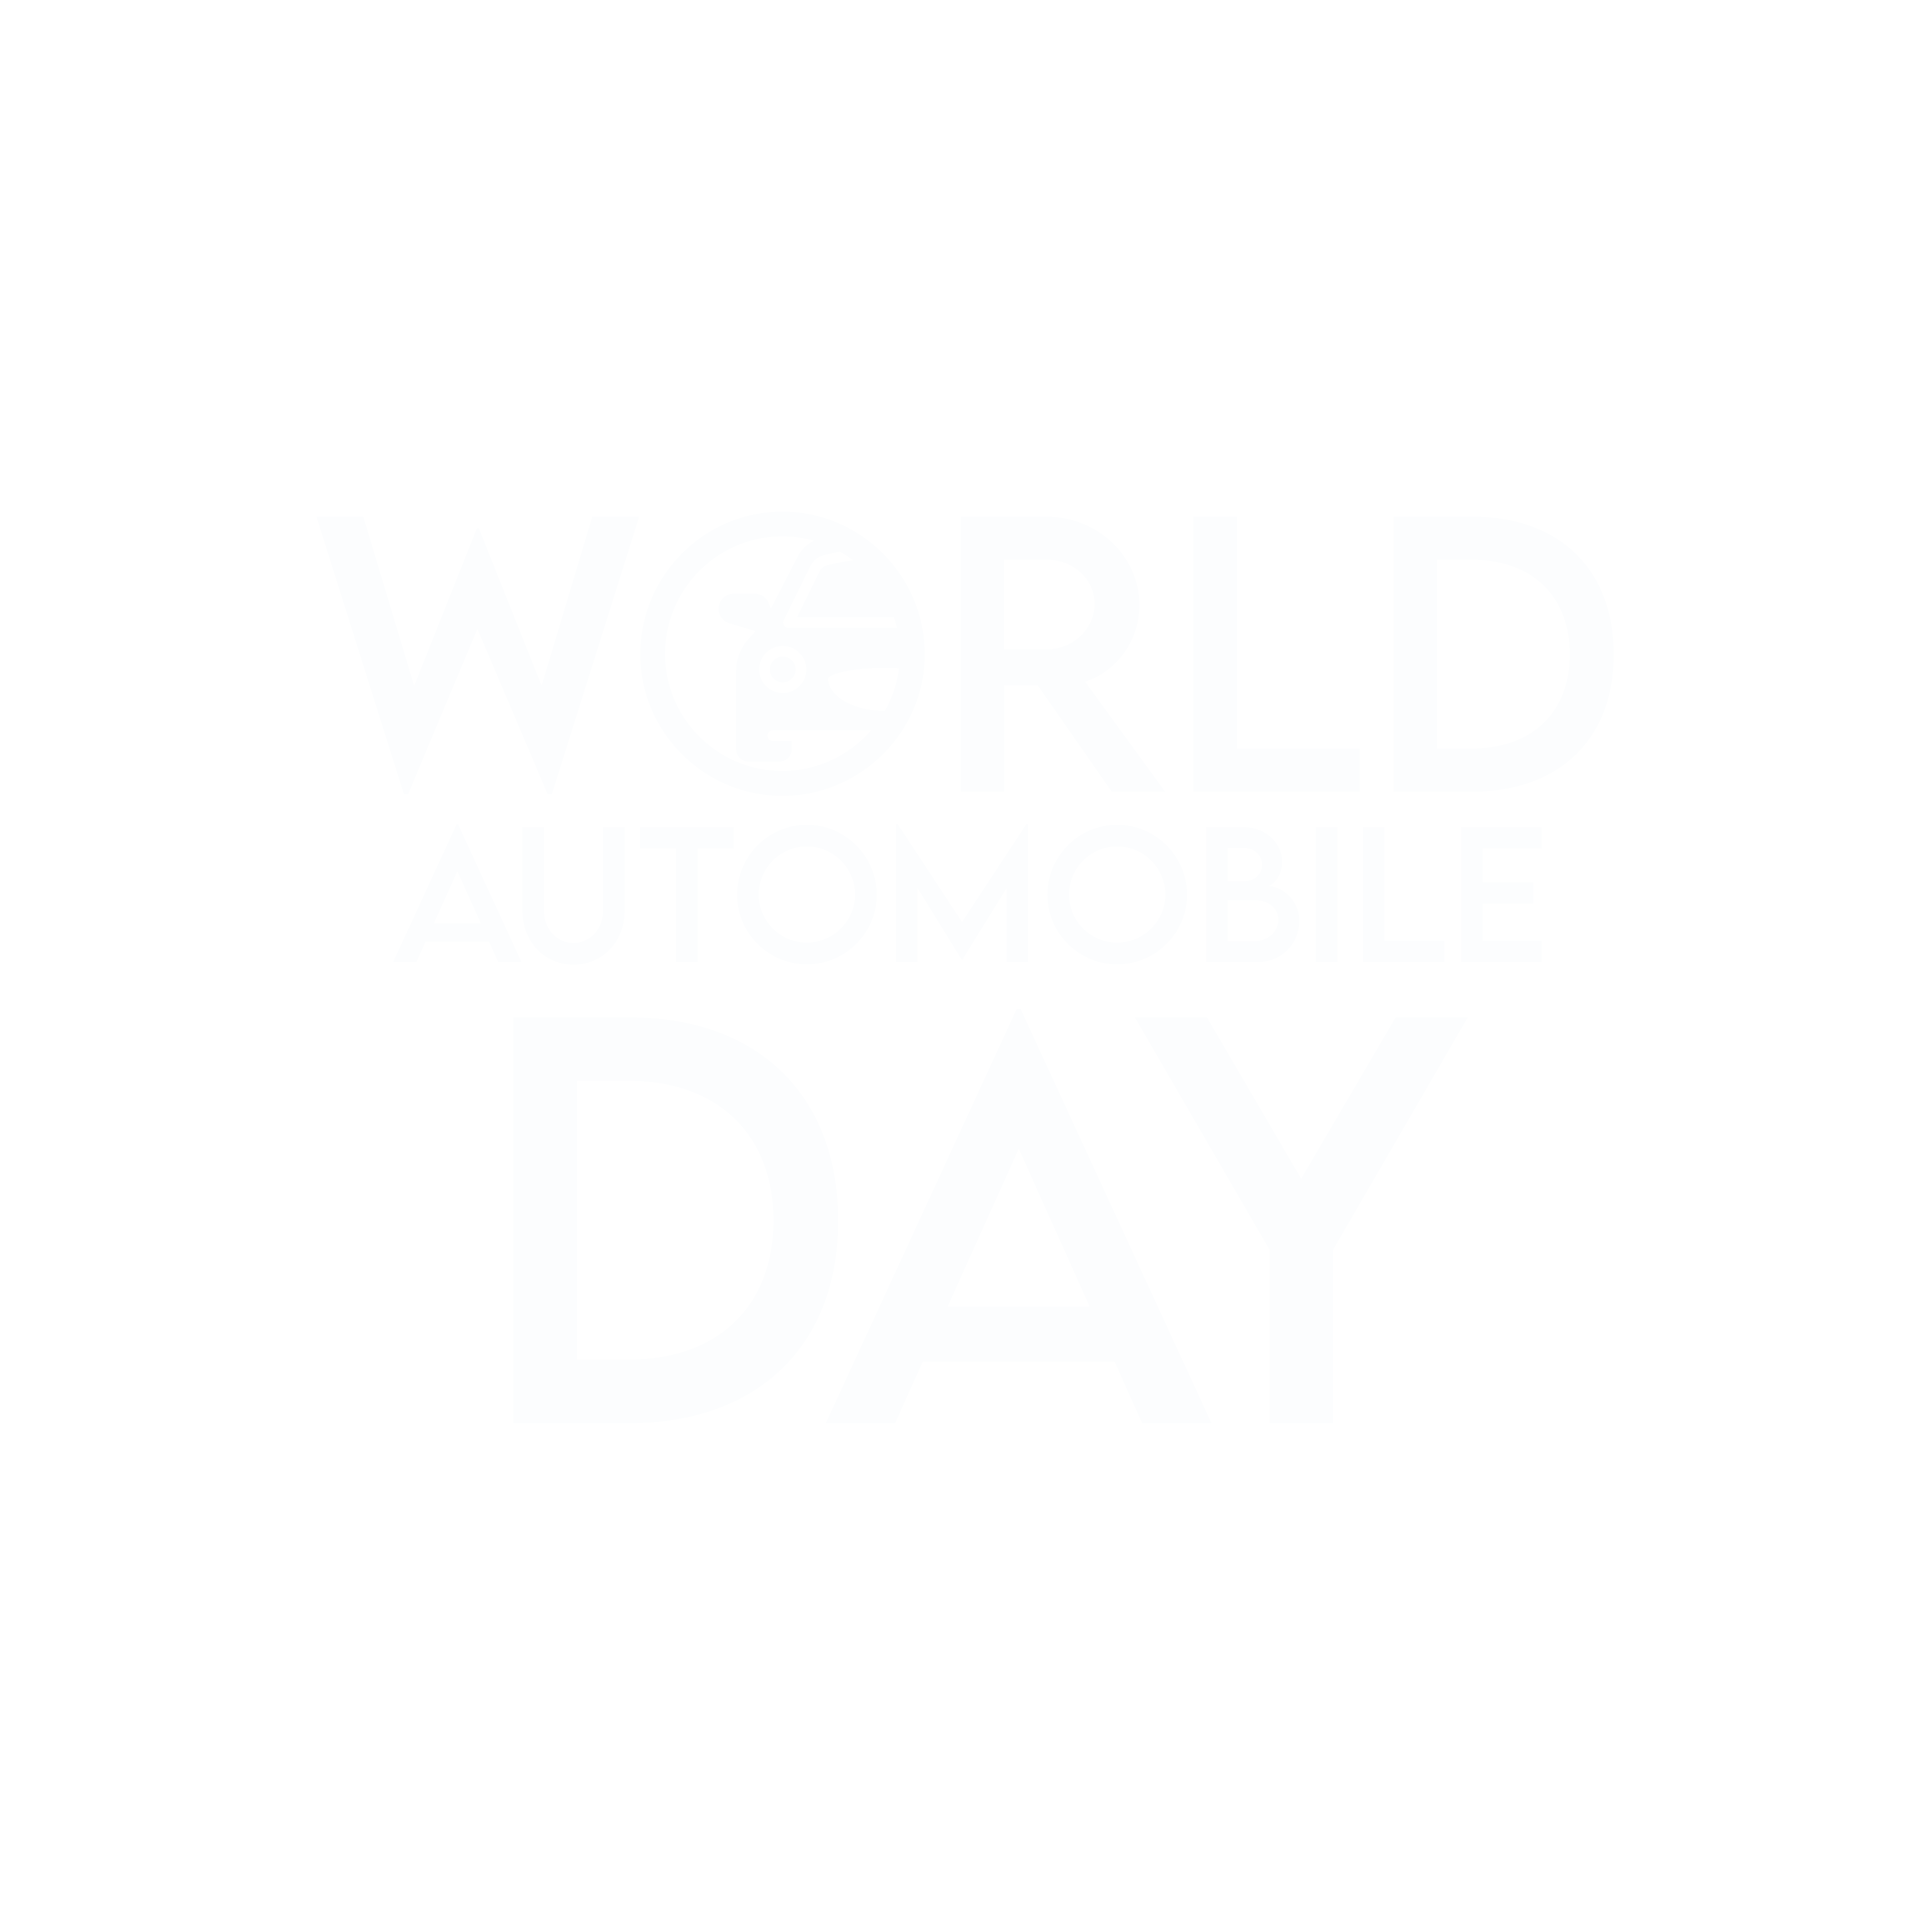 World Automobile Day Logo